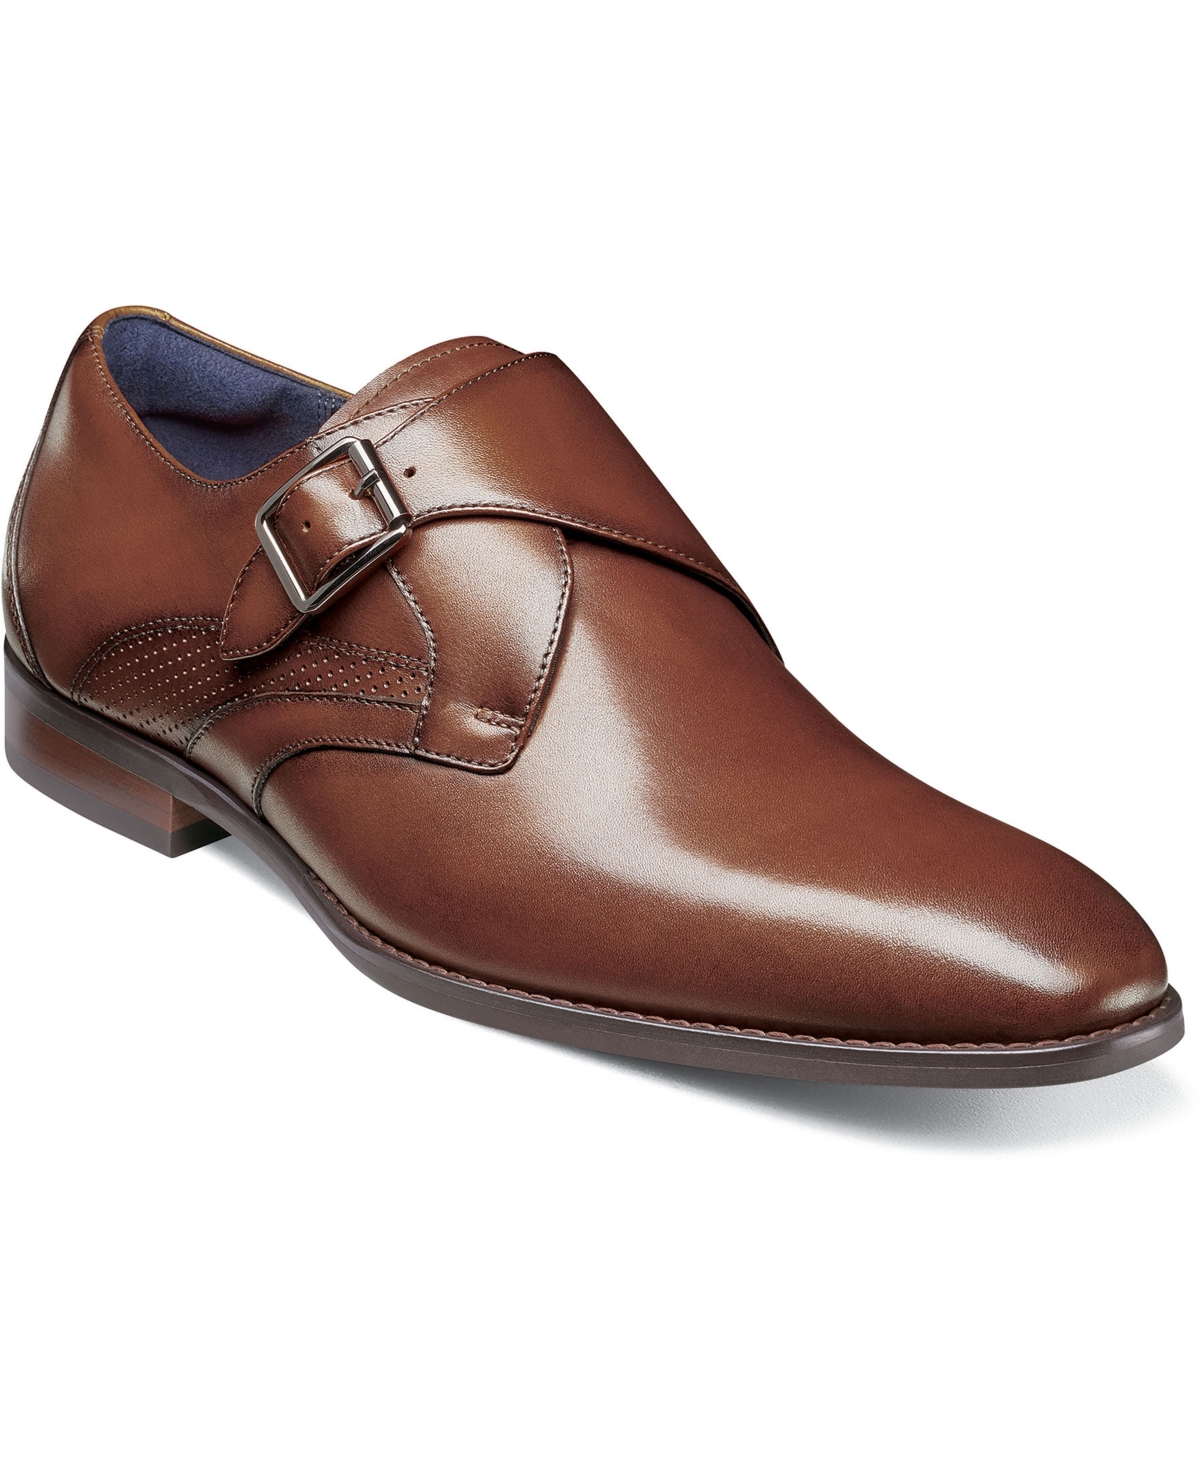 Men's Karcher Plain Toe Monk Strap Slip-On Dress Shoes - Navy